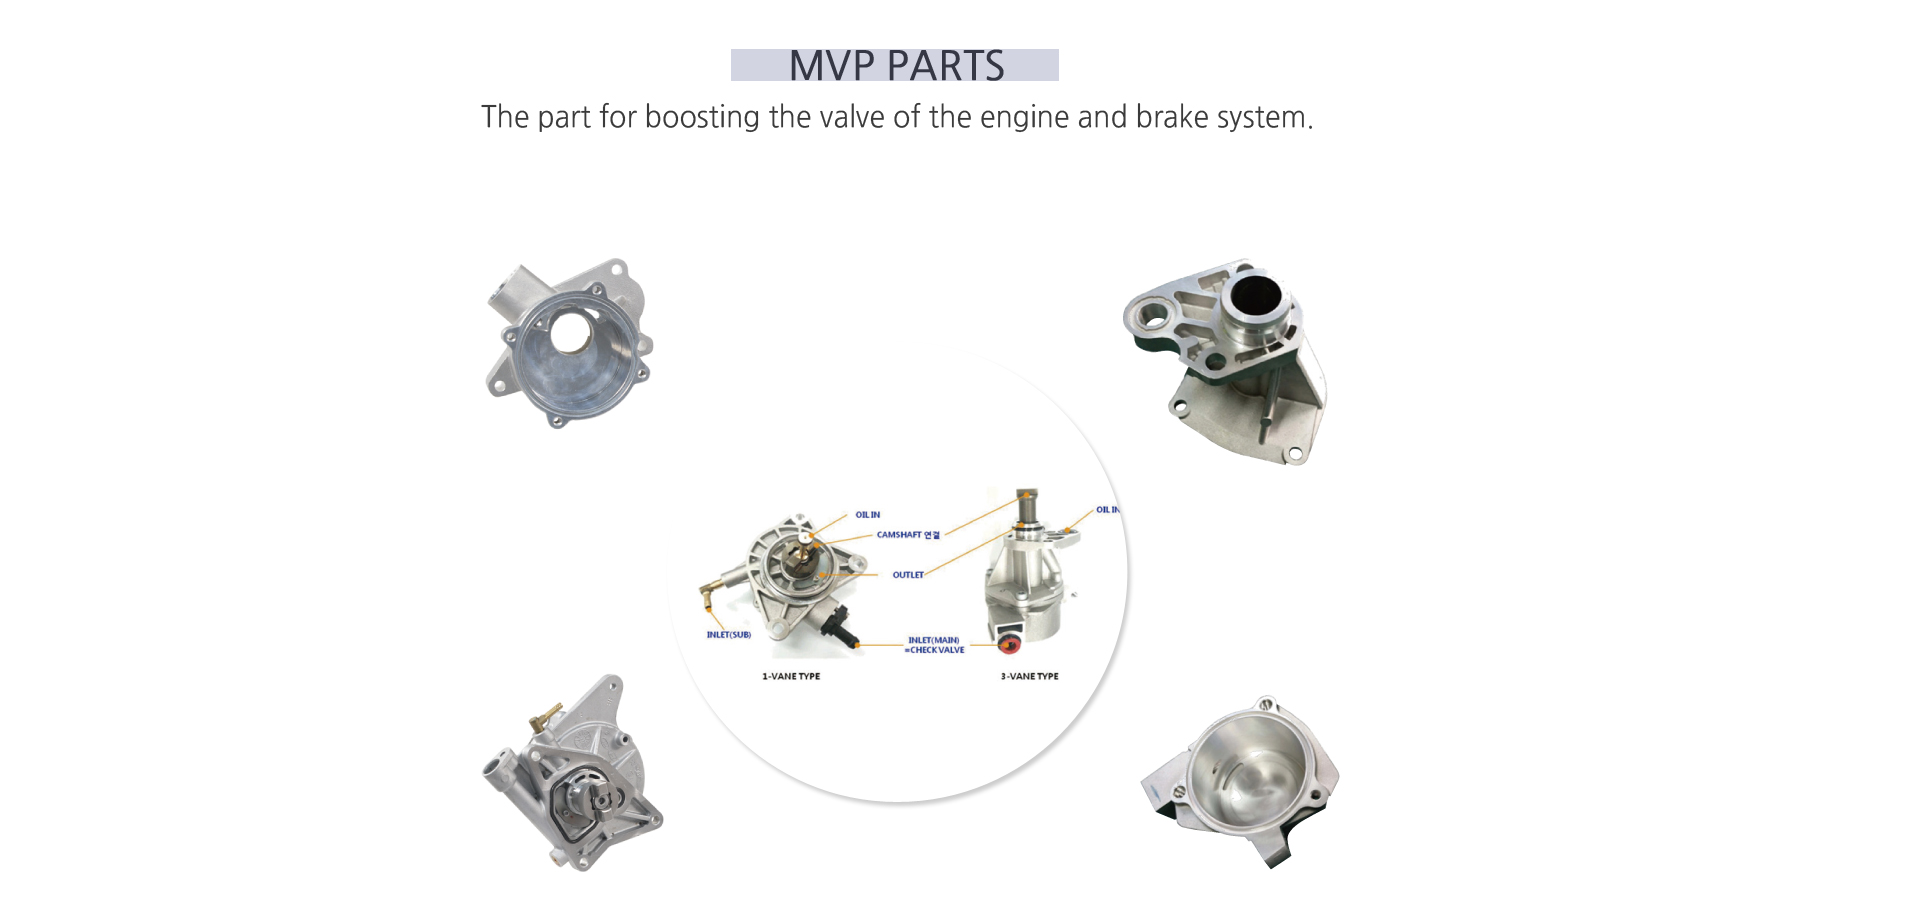 MVP parts Image